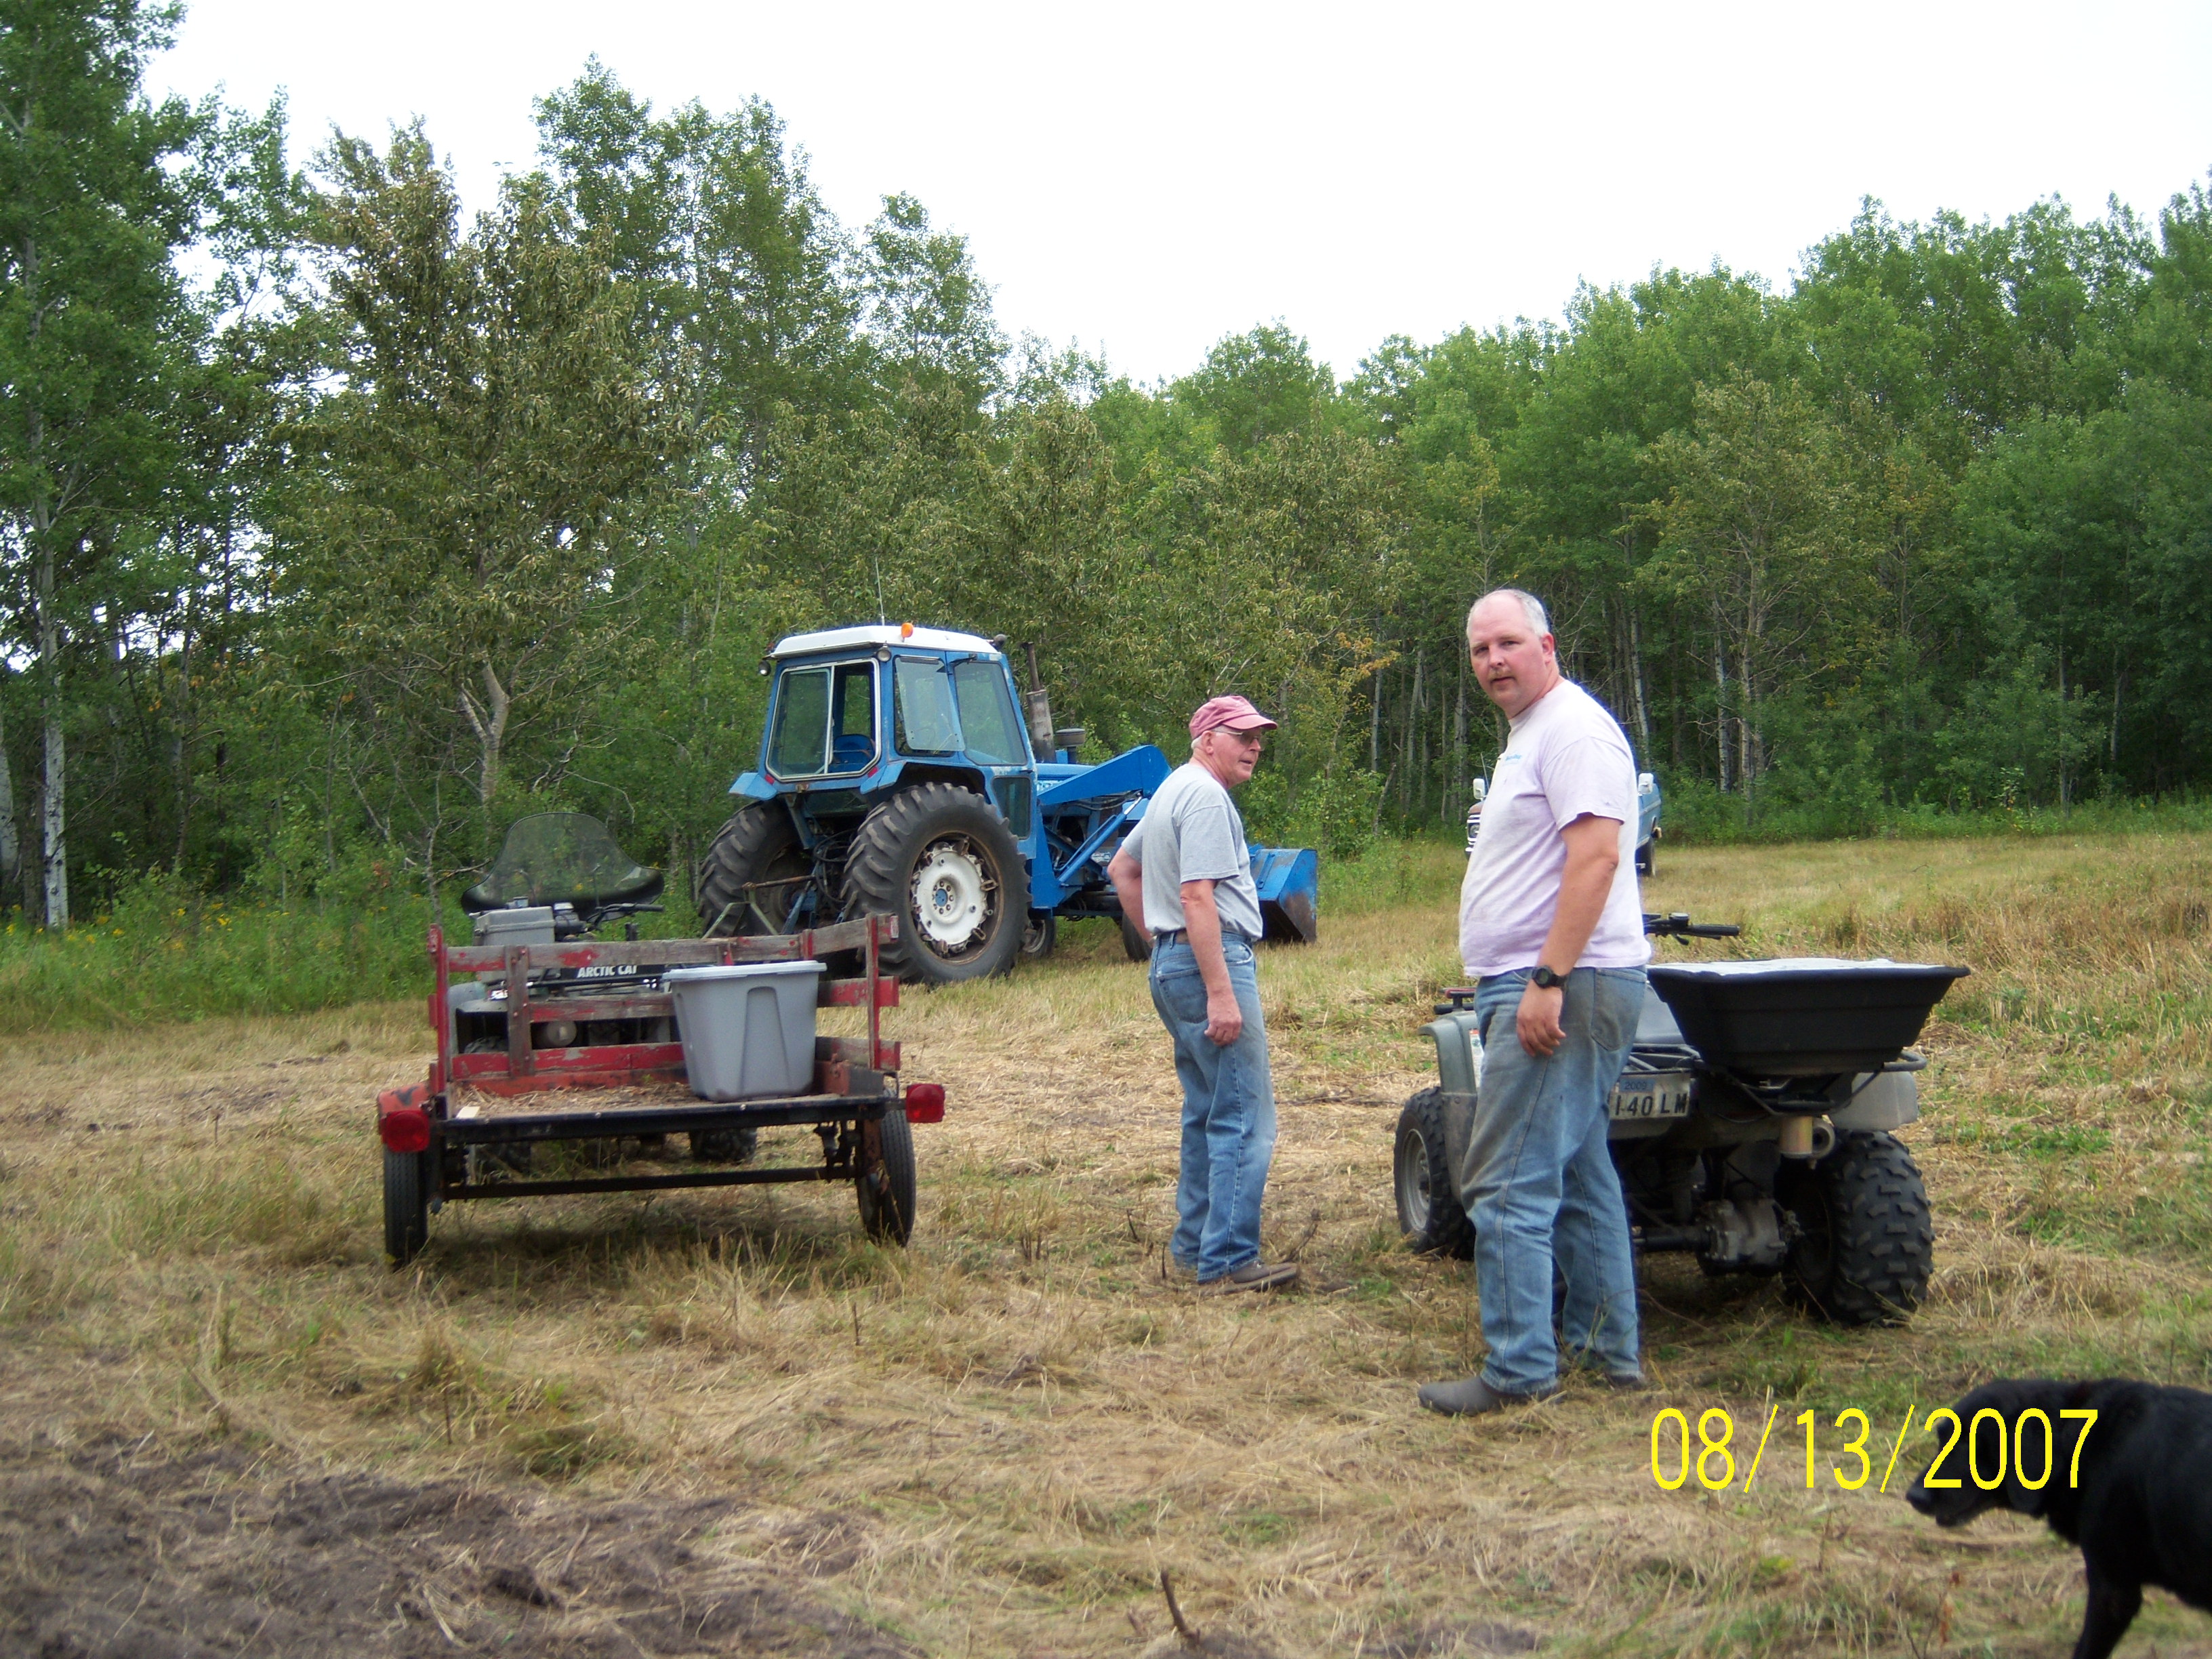 Glenn helping Arlan planting